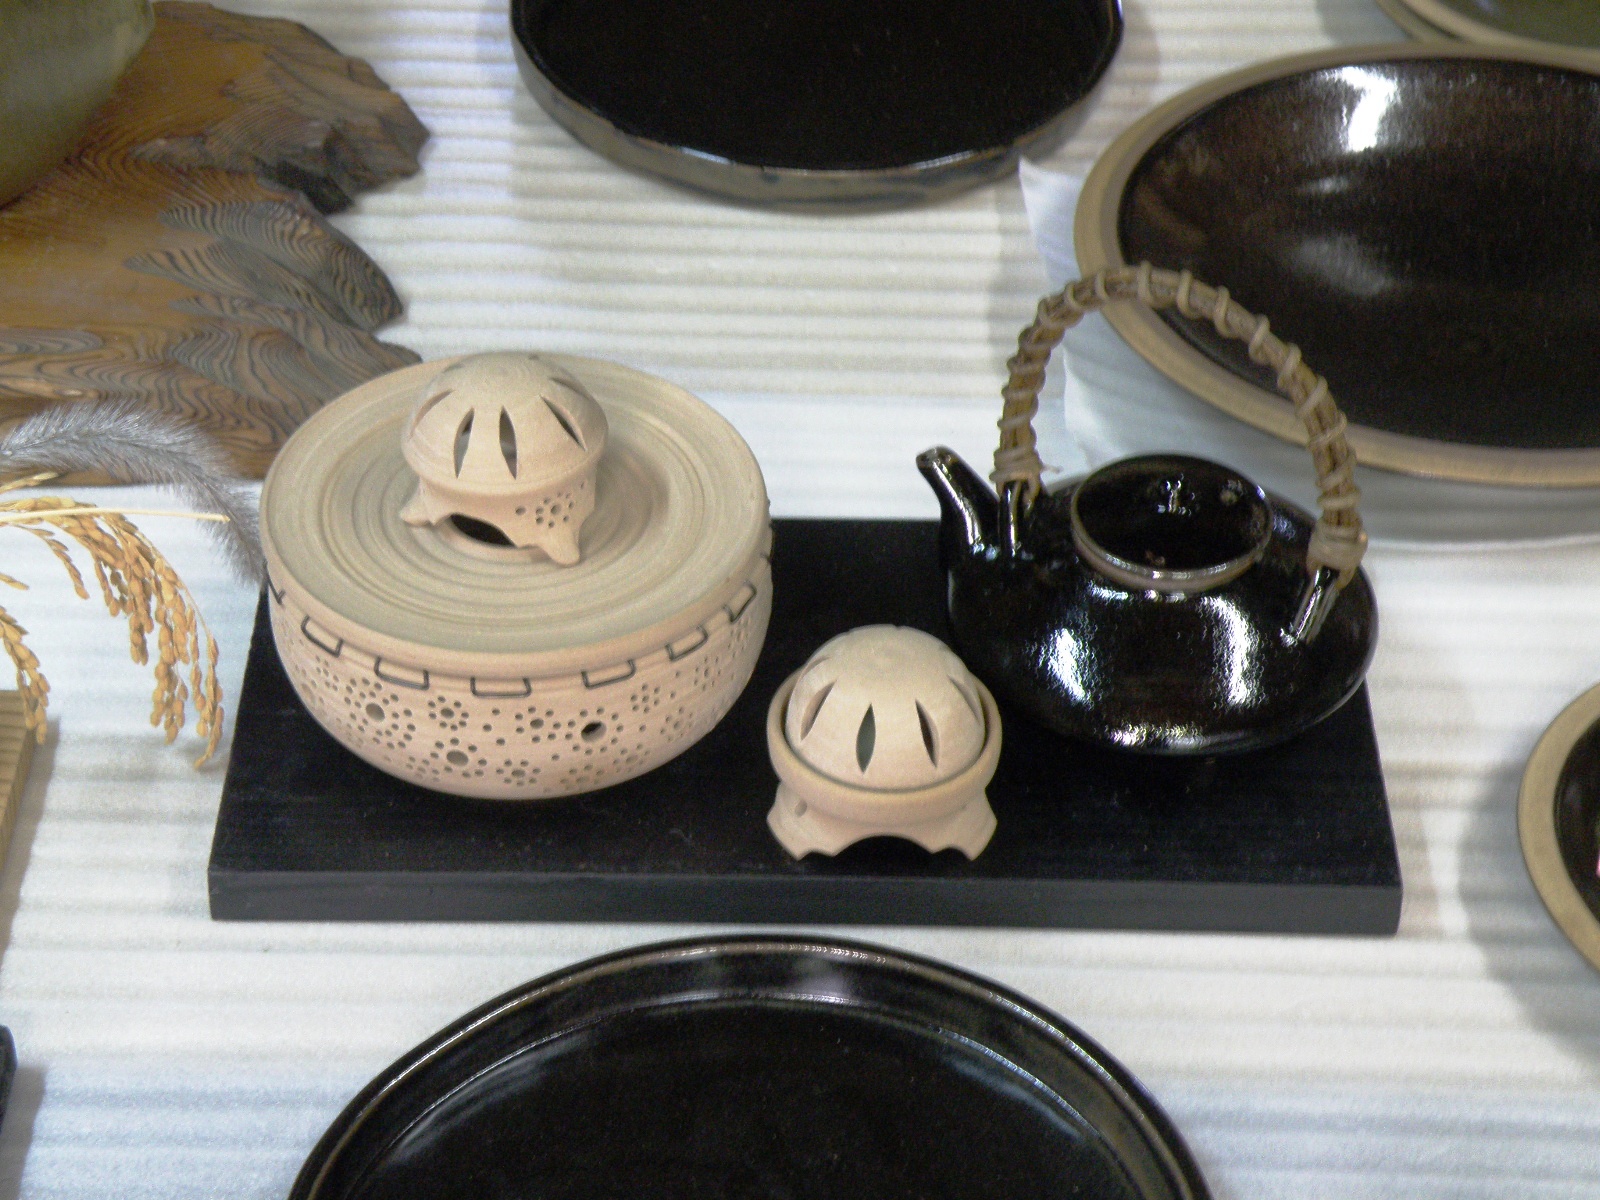 Satsumayaki Pottery are dried